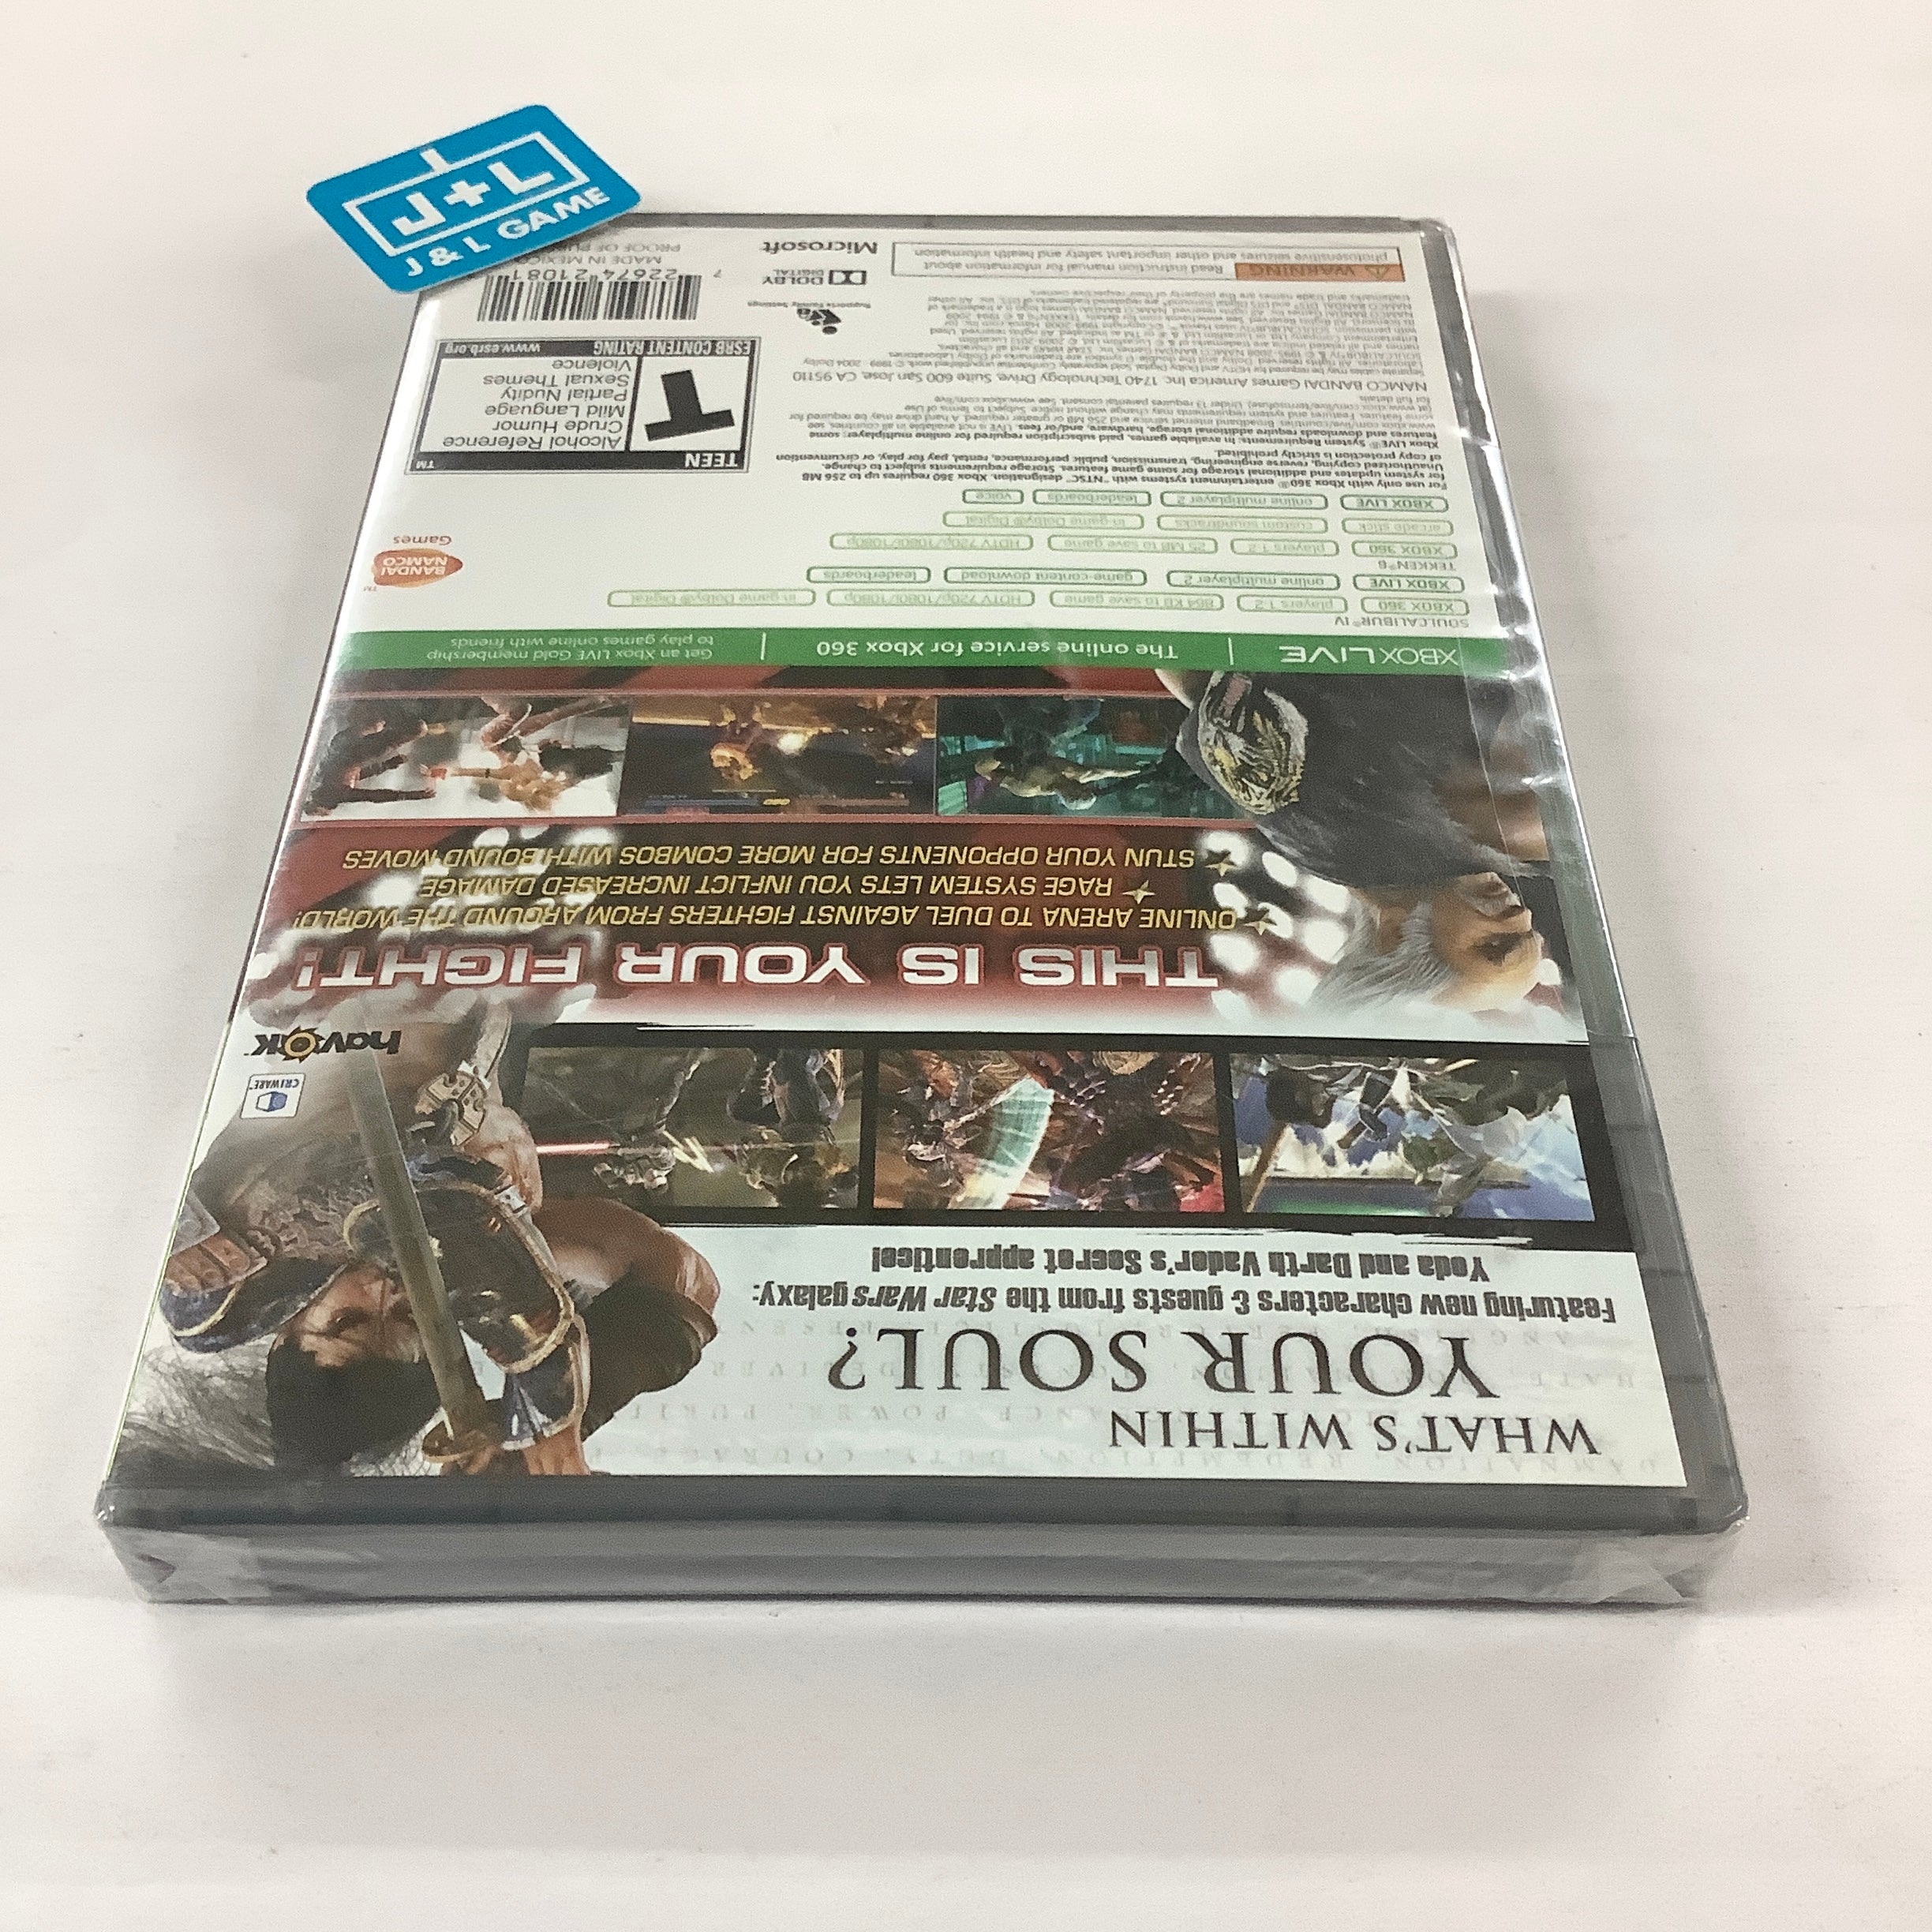 SoulCalibur IV / Tekken 6 - Xbox 360 Video Games Namco Bandai Games   